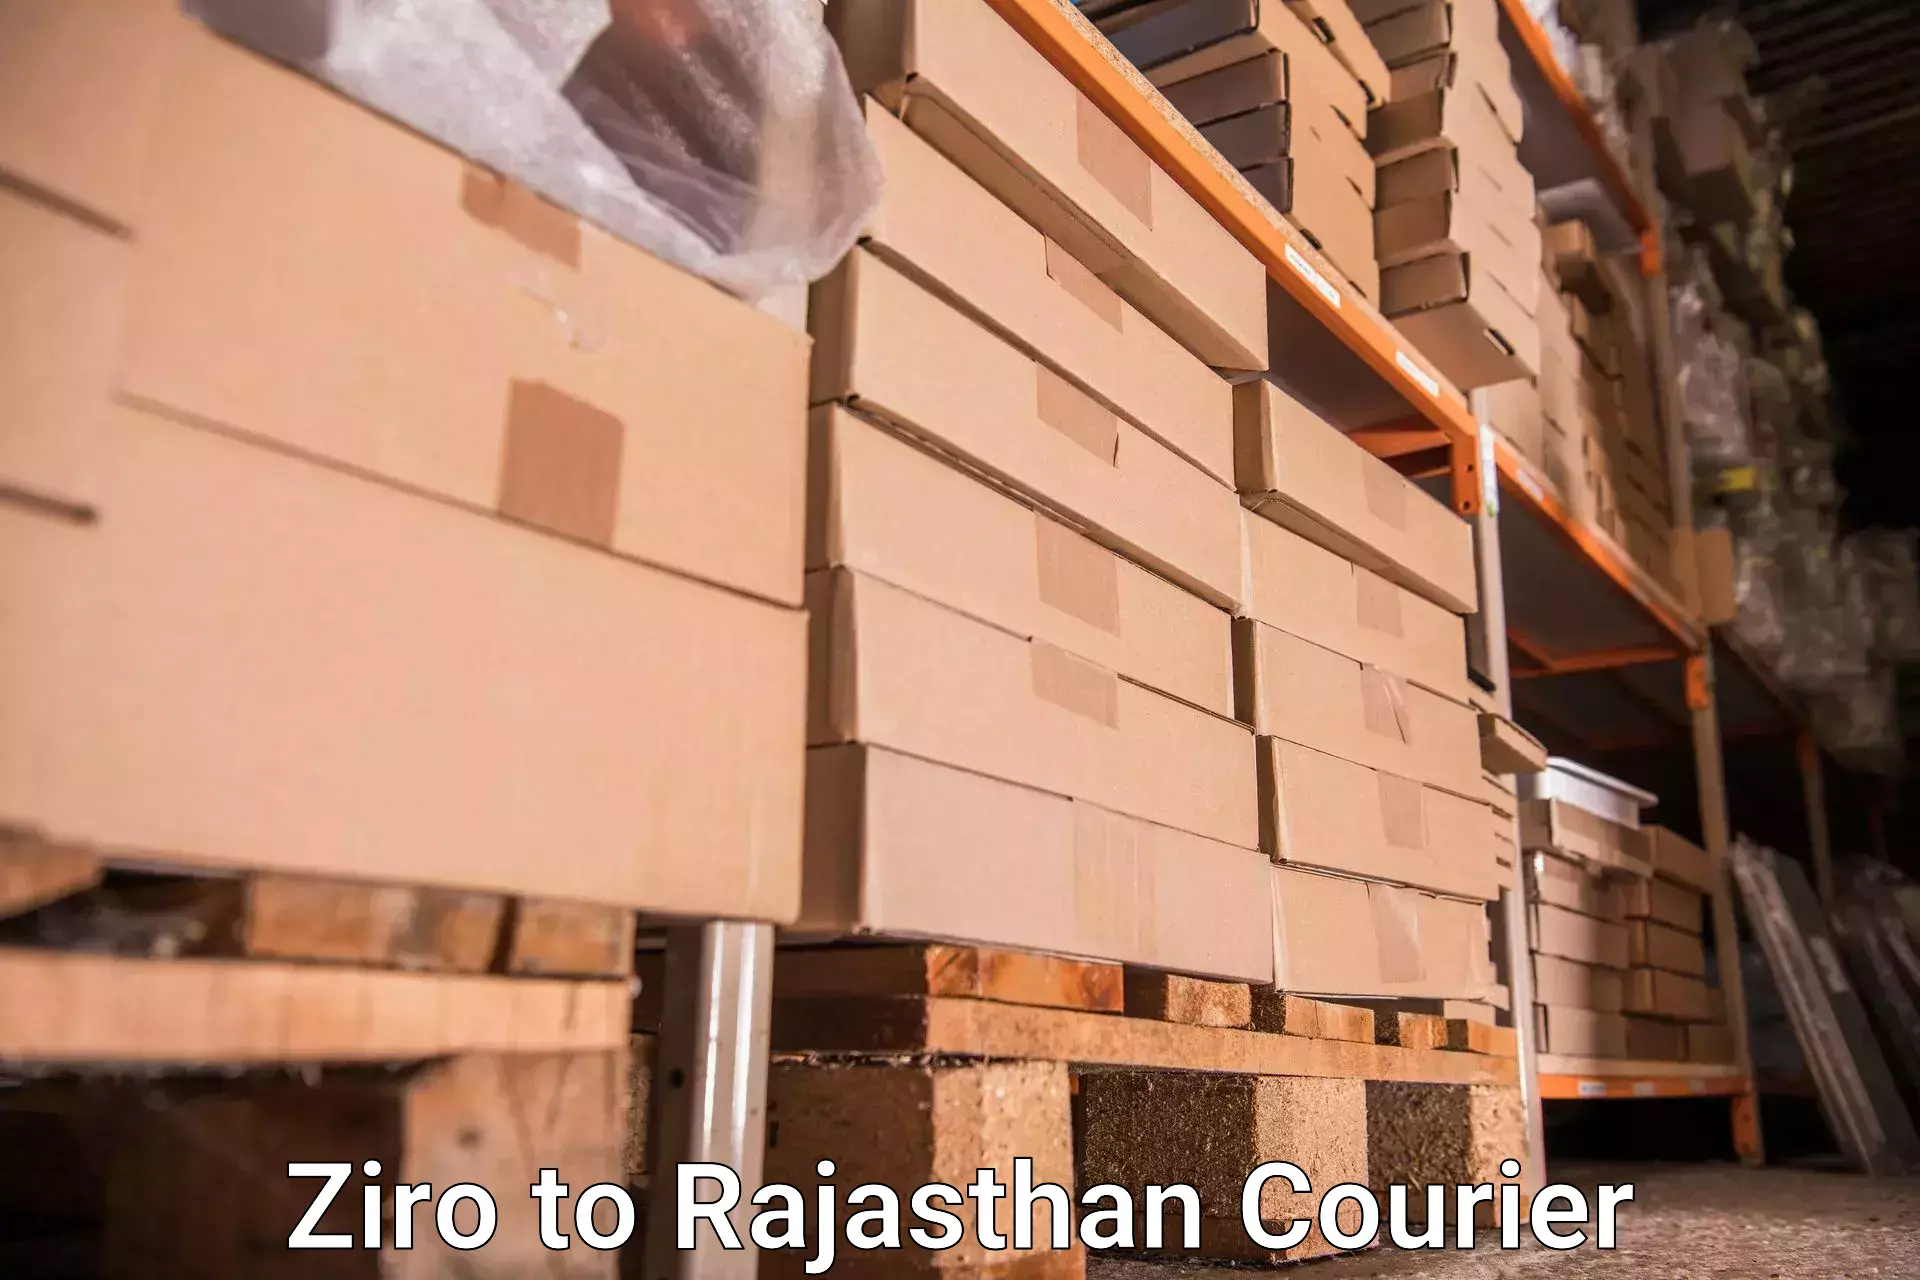 Baggage transport network Ziro to Khandela Sikar